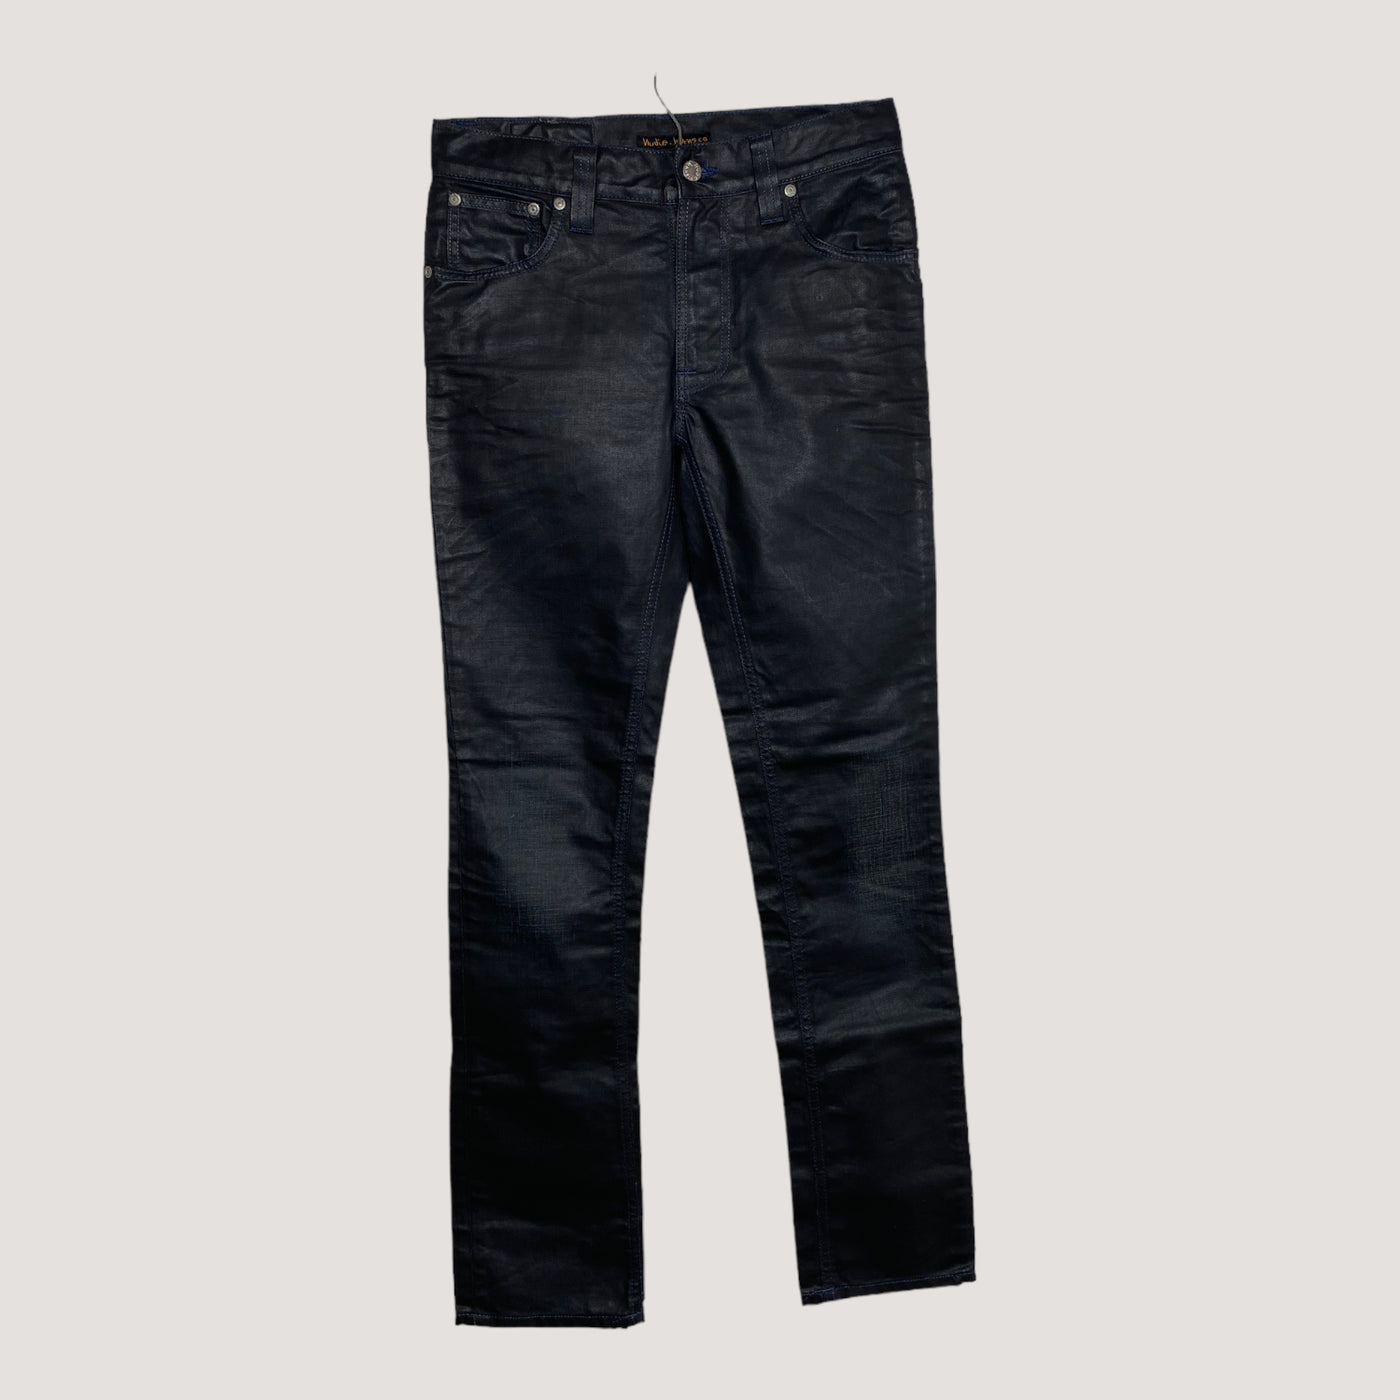 Nudie Jeans thin finn jeans, black coated indigo | women 29/32